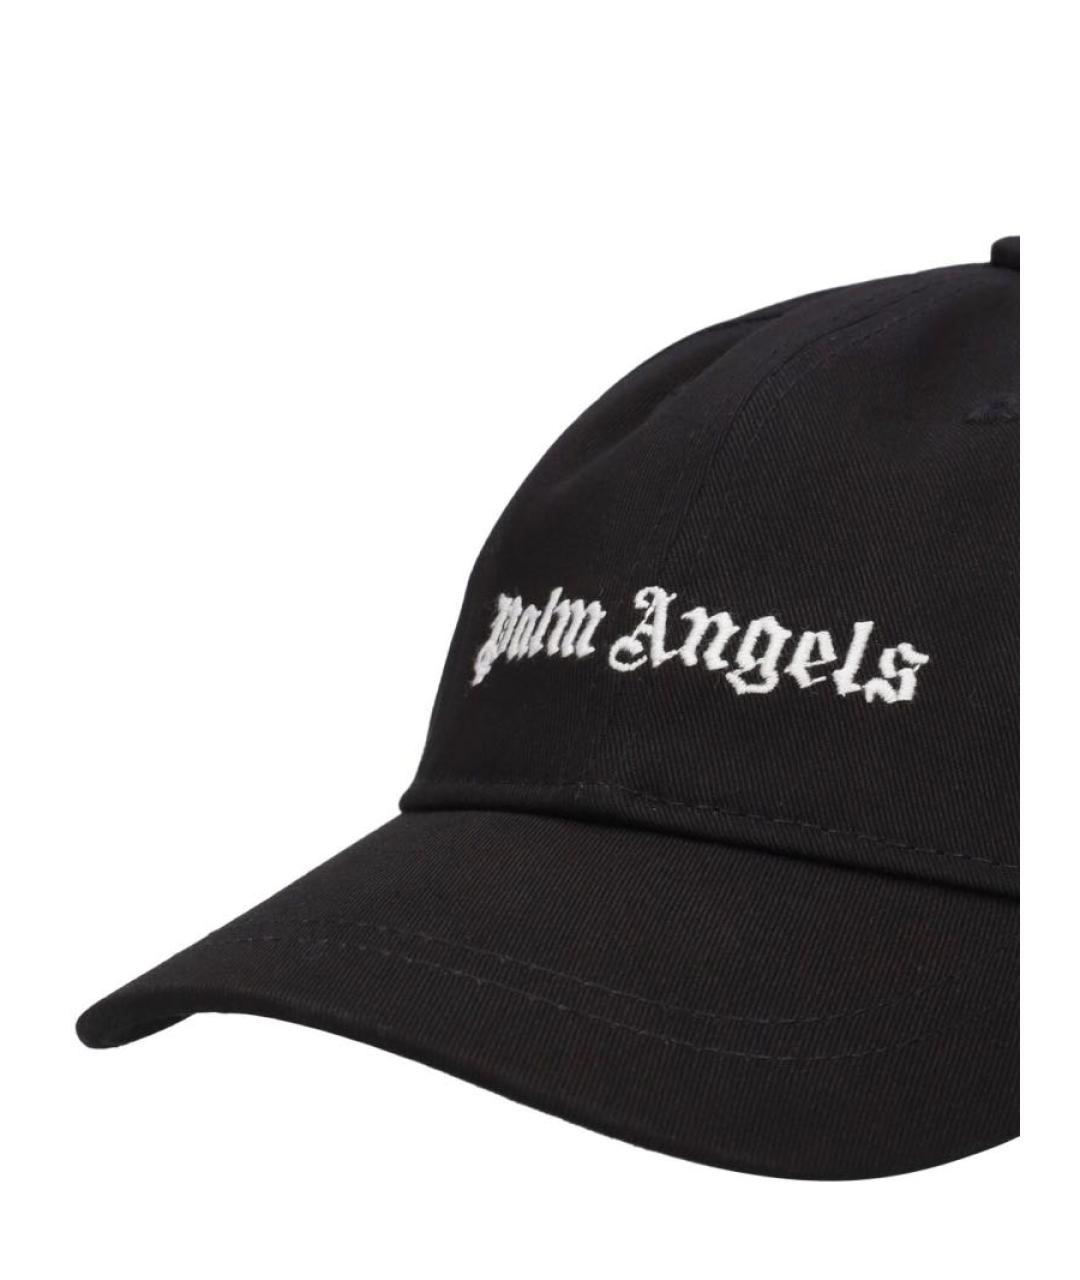 PALM ANGELS Черная хлопковая кепка/бейсболка, фото 2